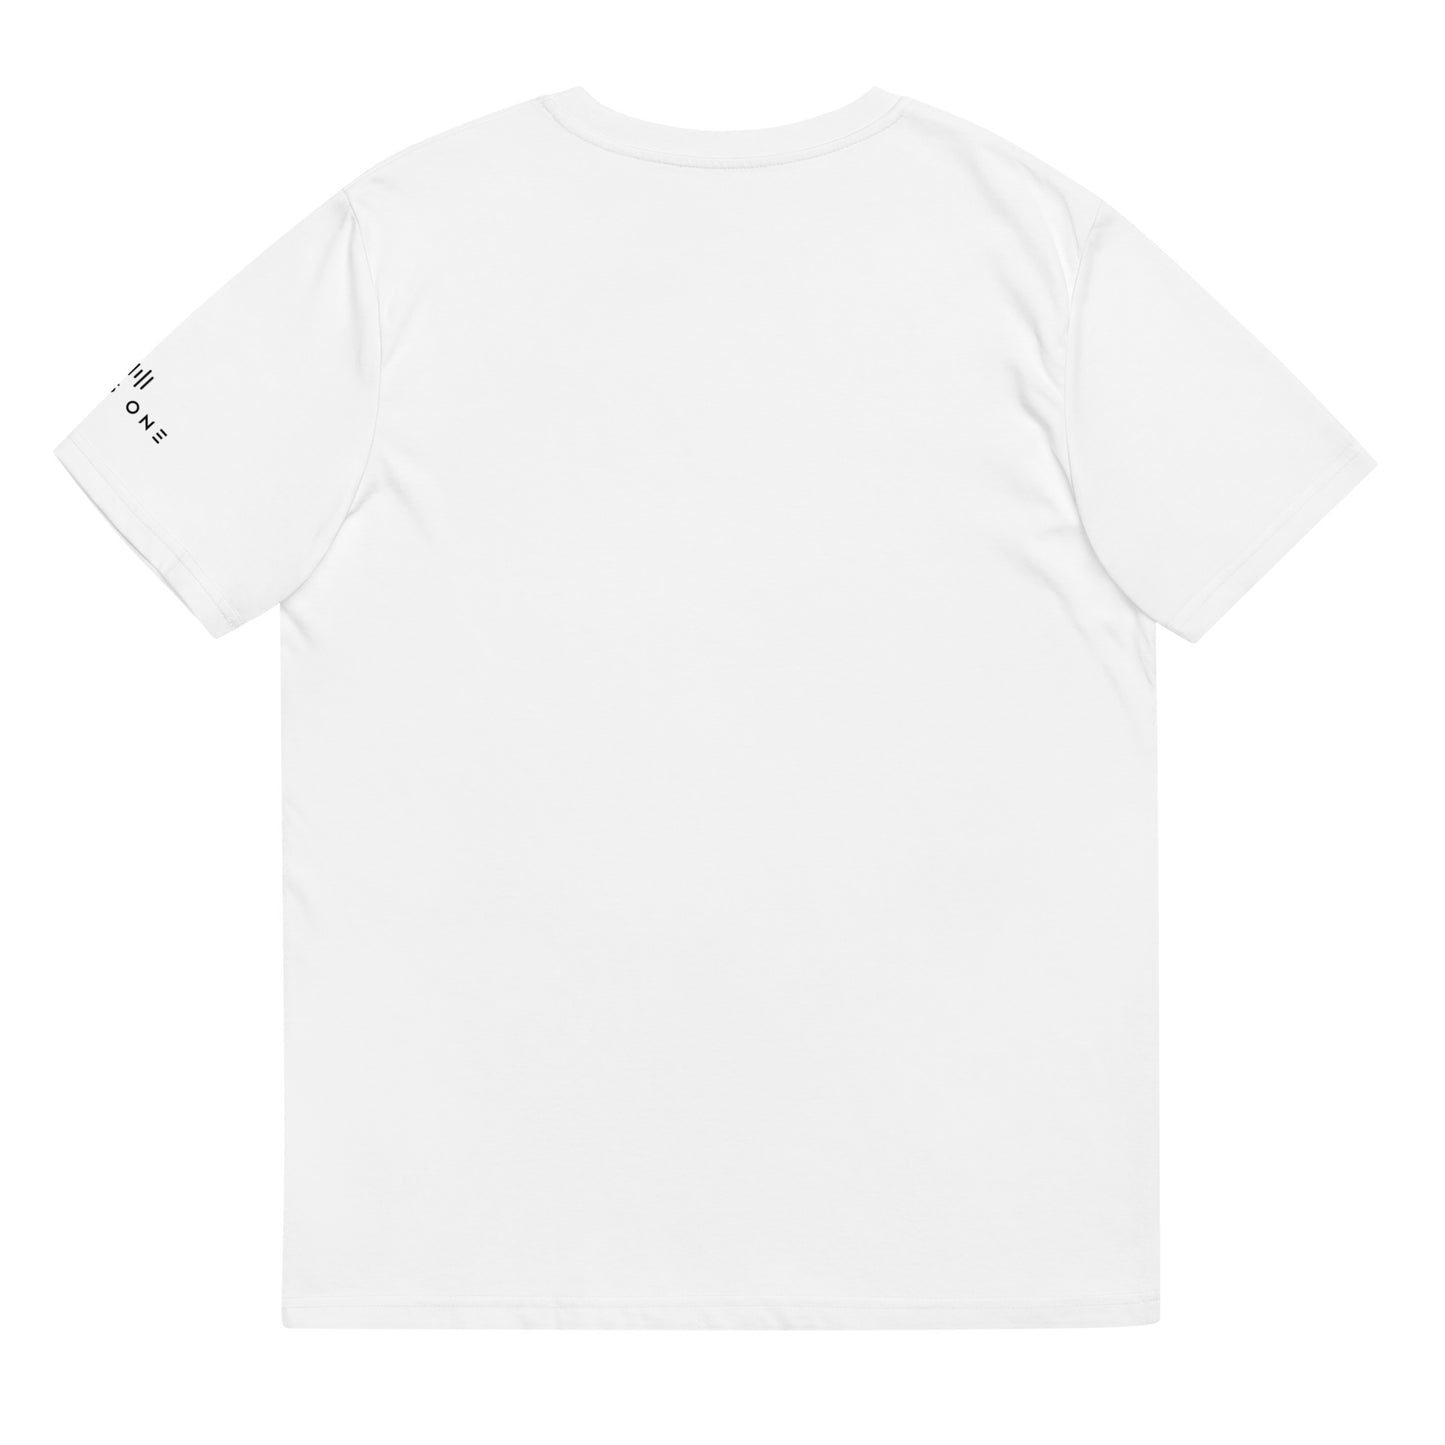 Prototype (v2) Unisex organic cotton t-shirt (Black Text)